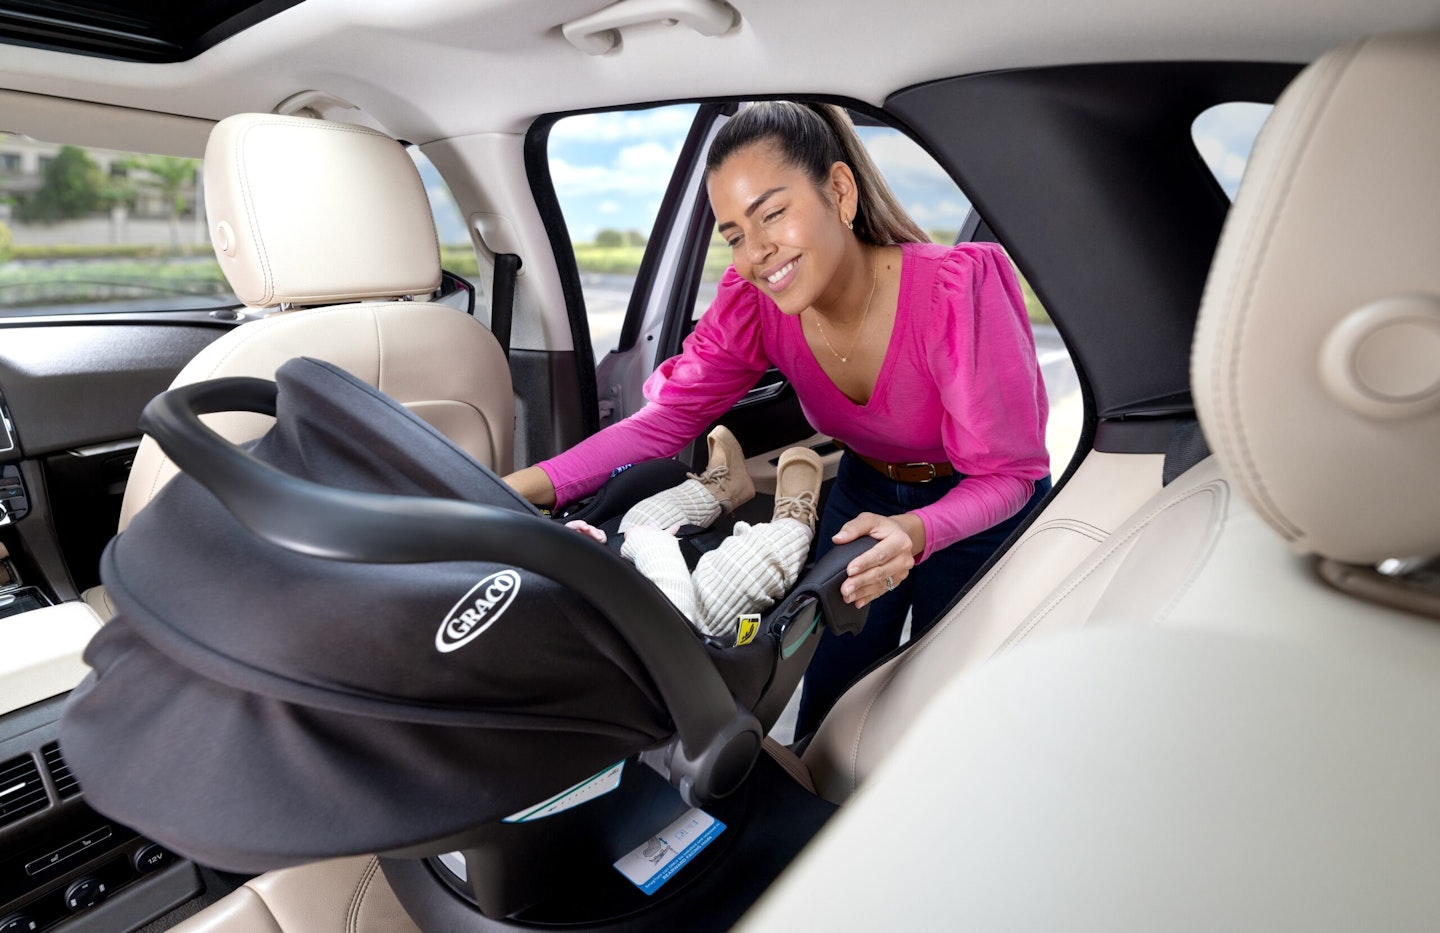 Woman putting child in car seat in car